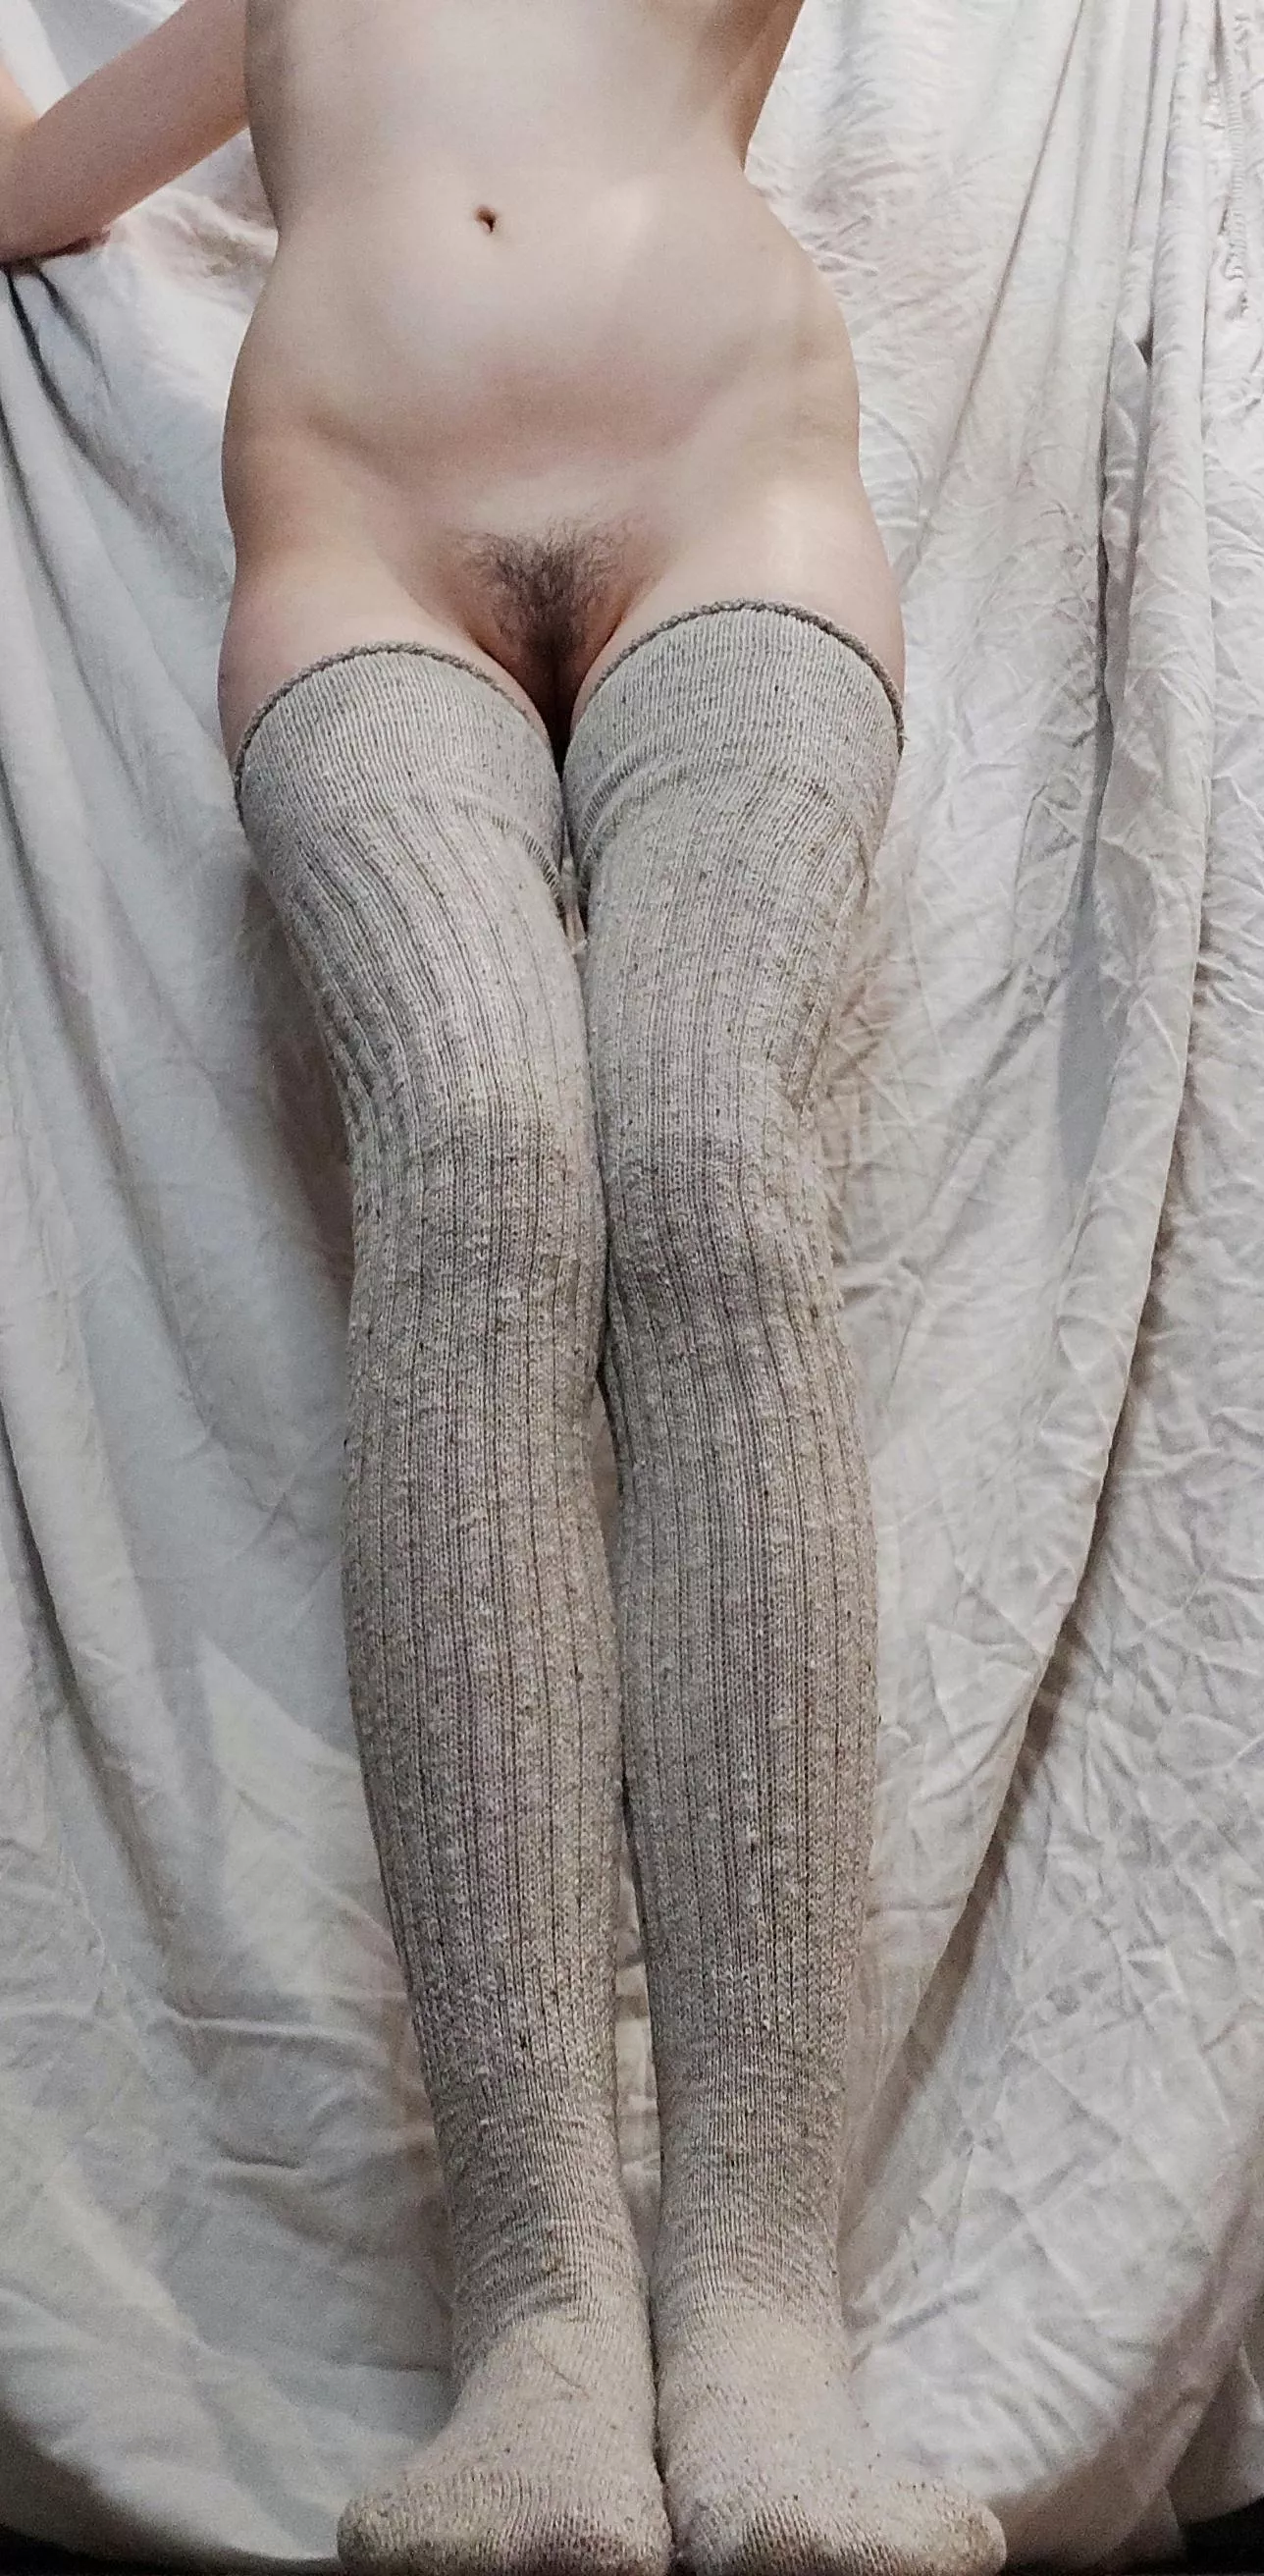 Long Socks - F] How do you like my extra long thigh high socks? nudes : socksgonewild |  NUDE-PICS.ORG